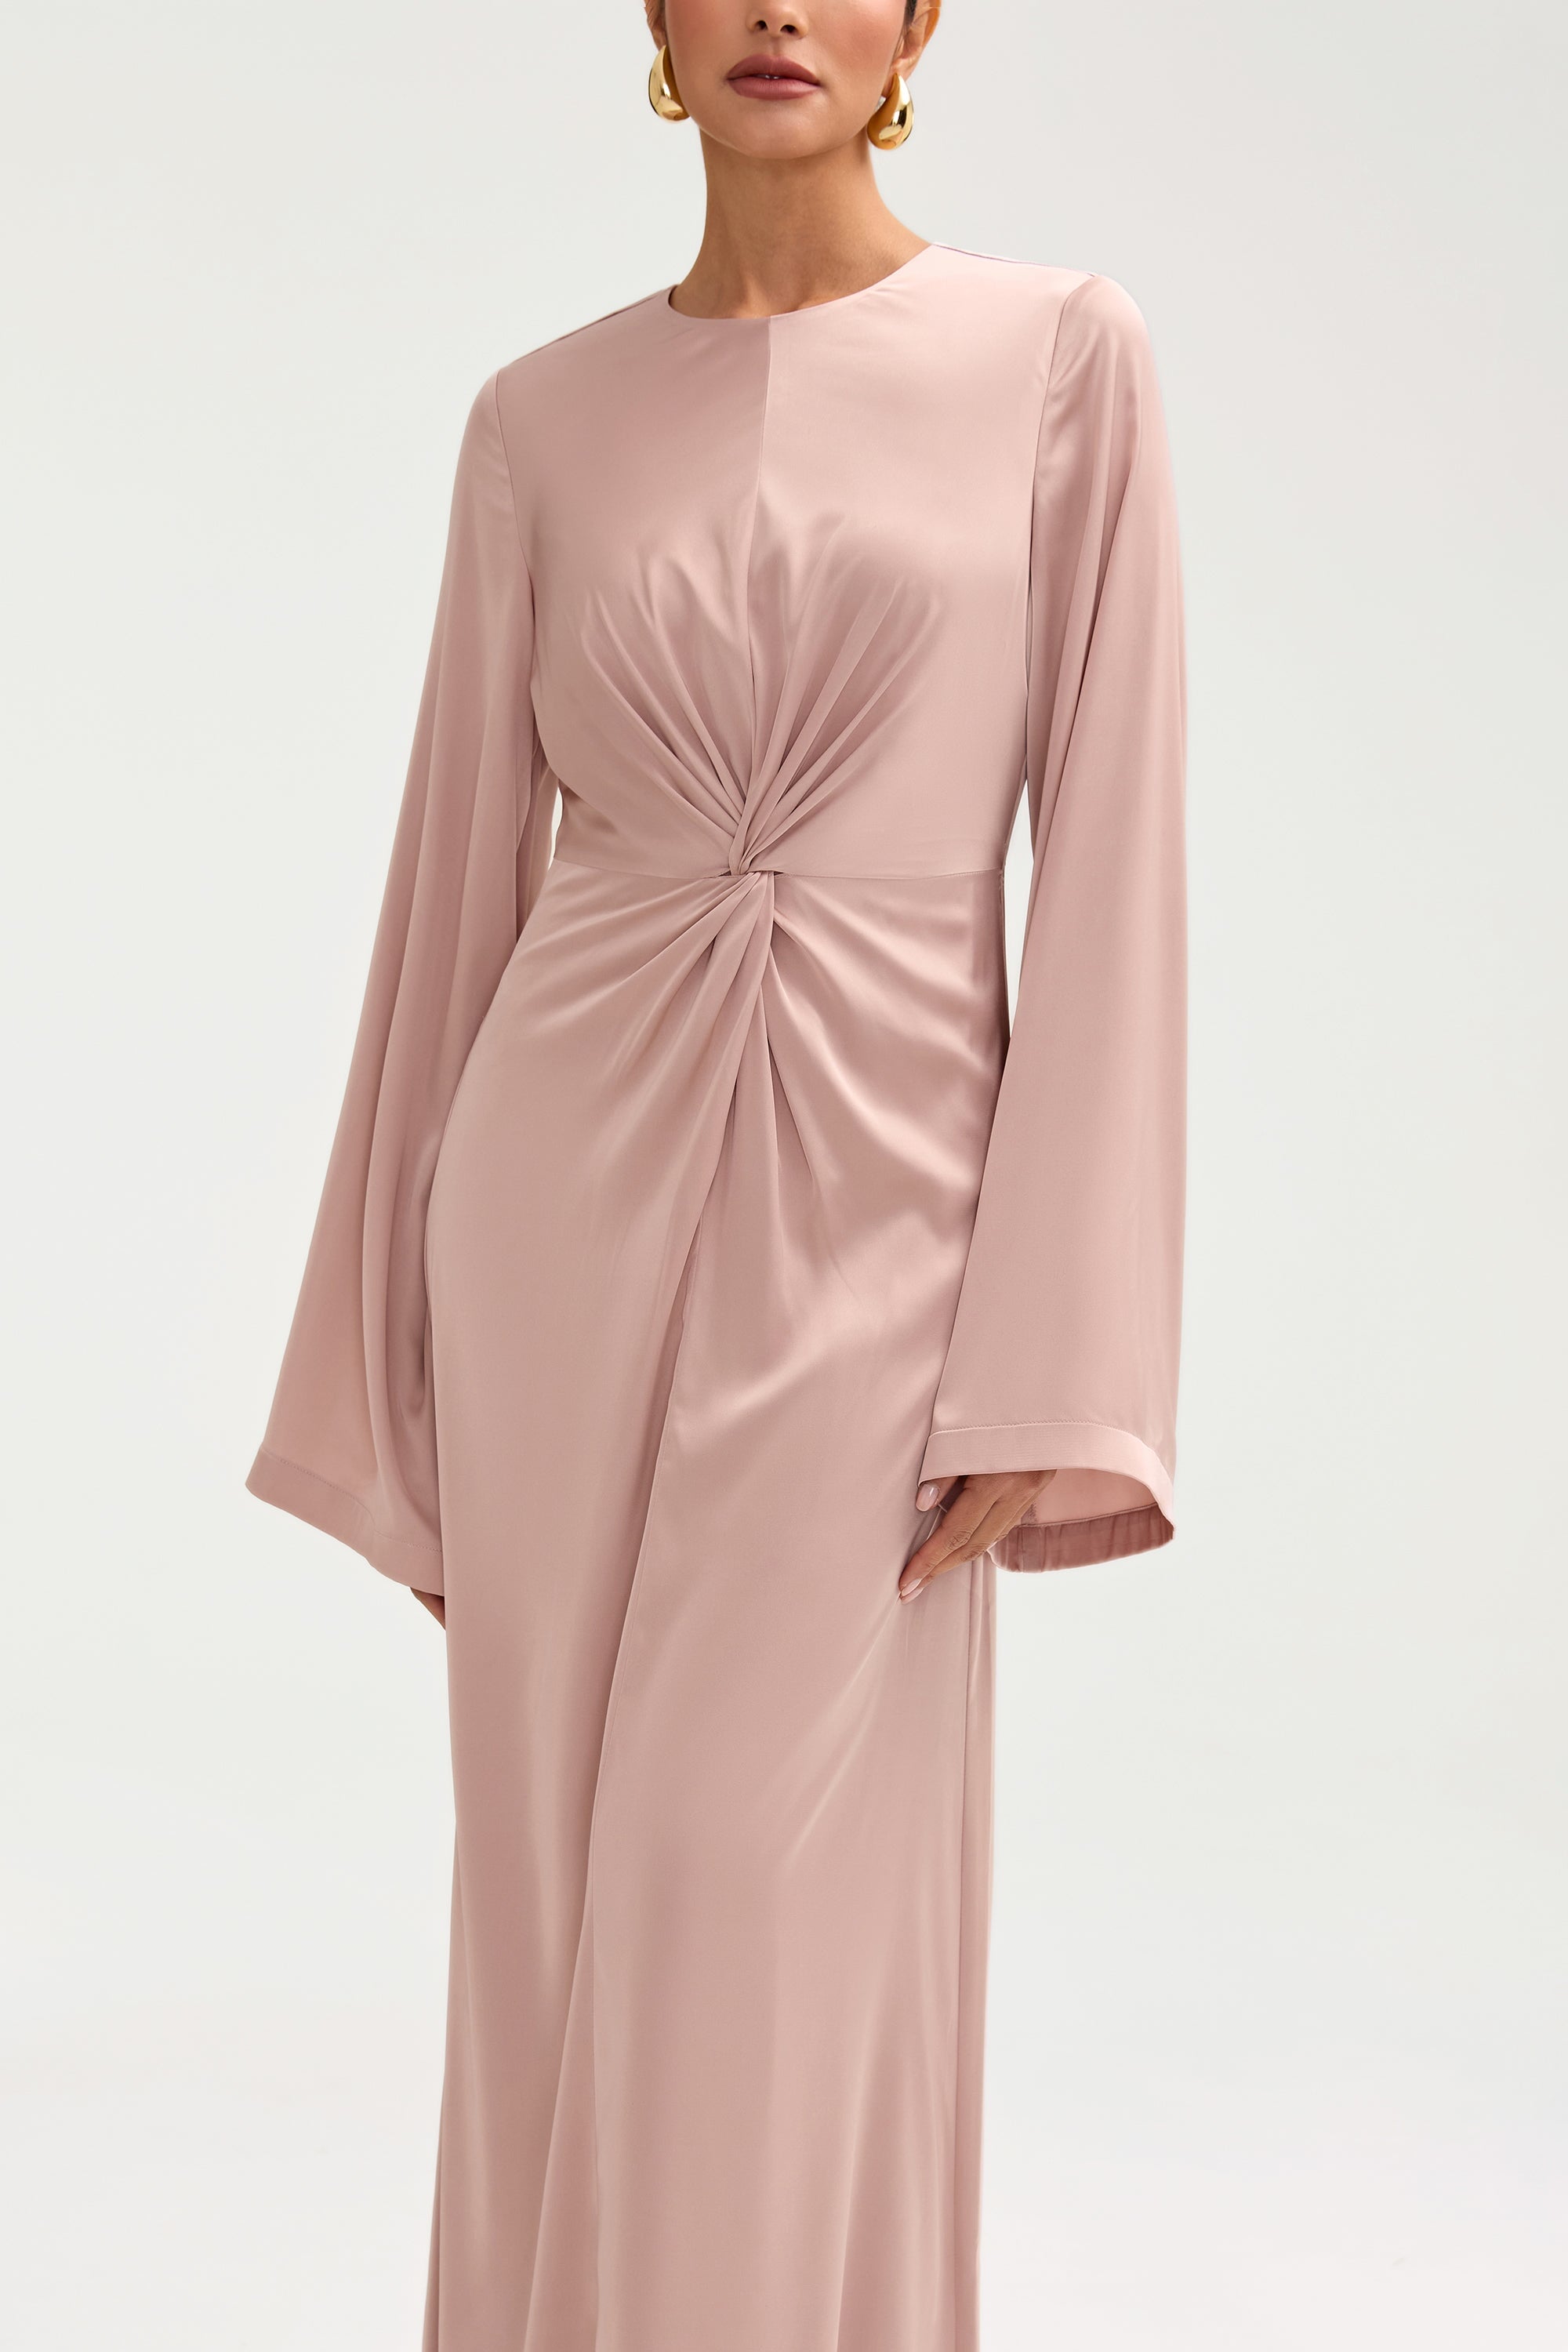 Duha Satin Twist Front Maxi Dress - Pink Jasmine Clothing saigonodysseyhotel 